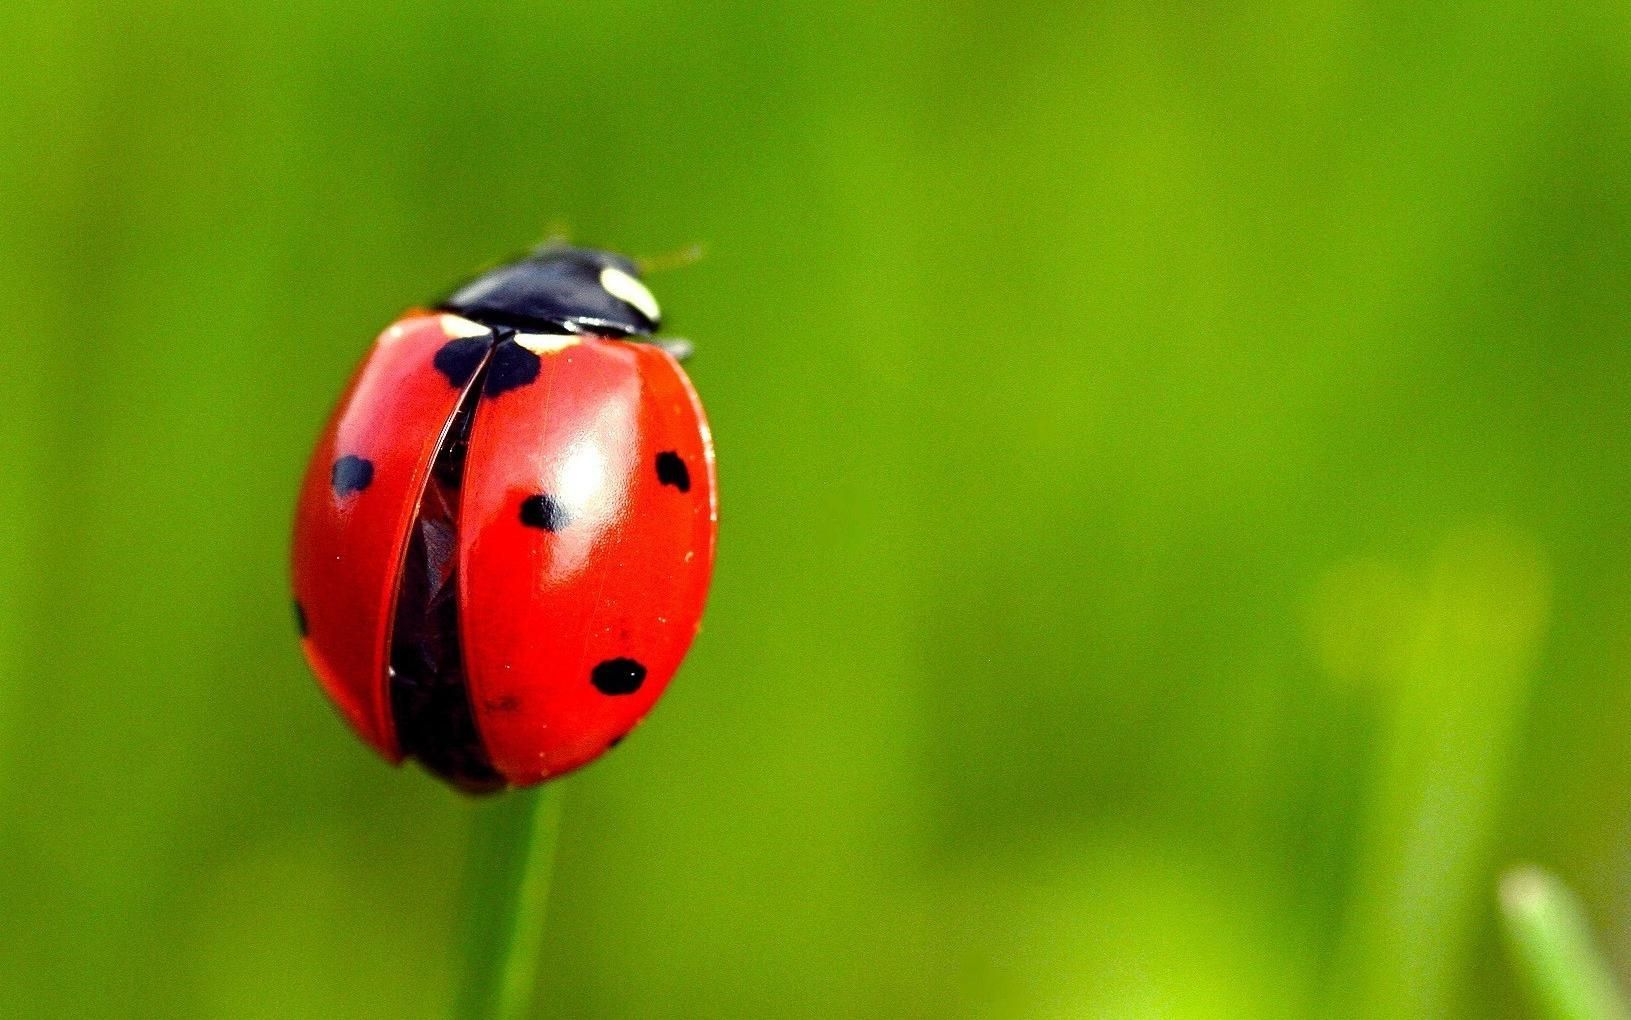 ladybug dream meaning, dream about ladybug. ladybug dream interpretation, seeing in a dream ladybug